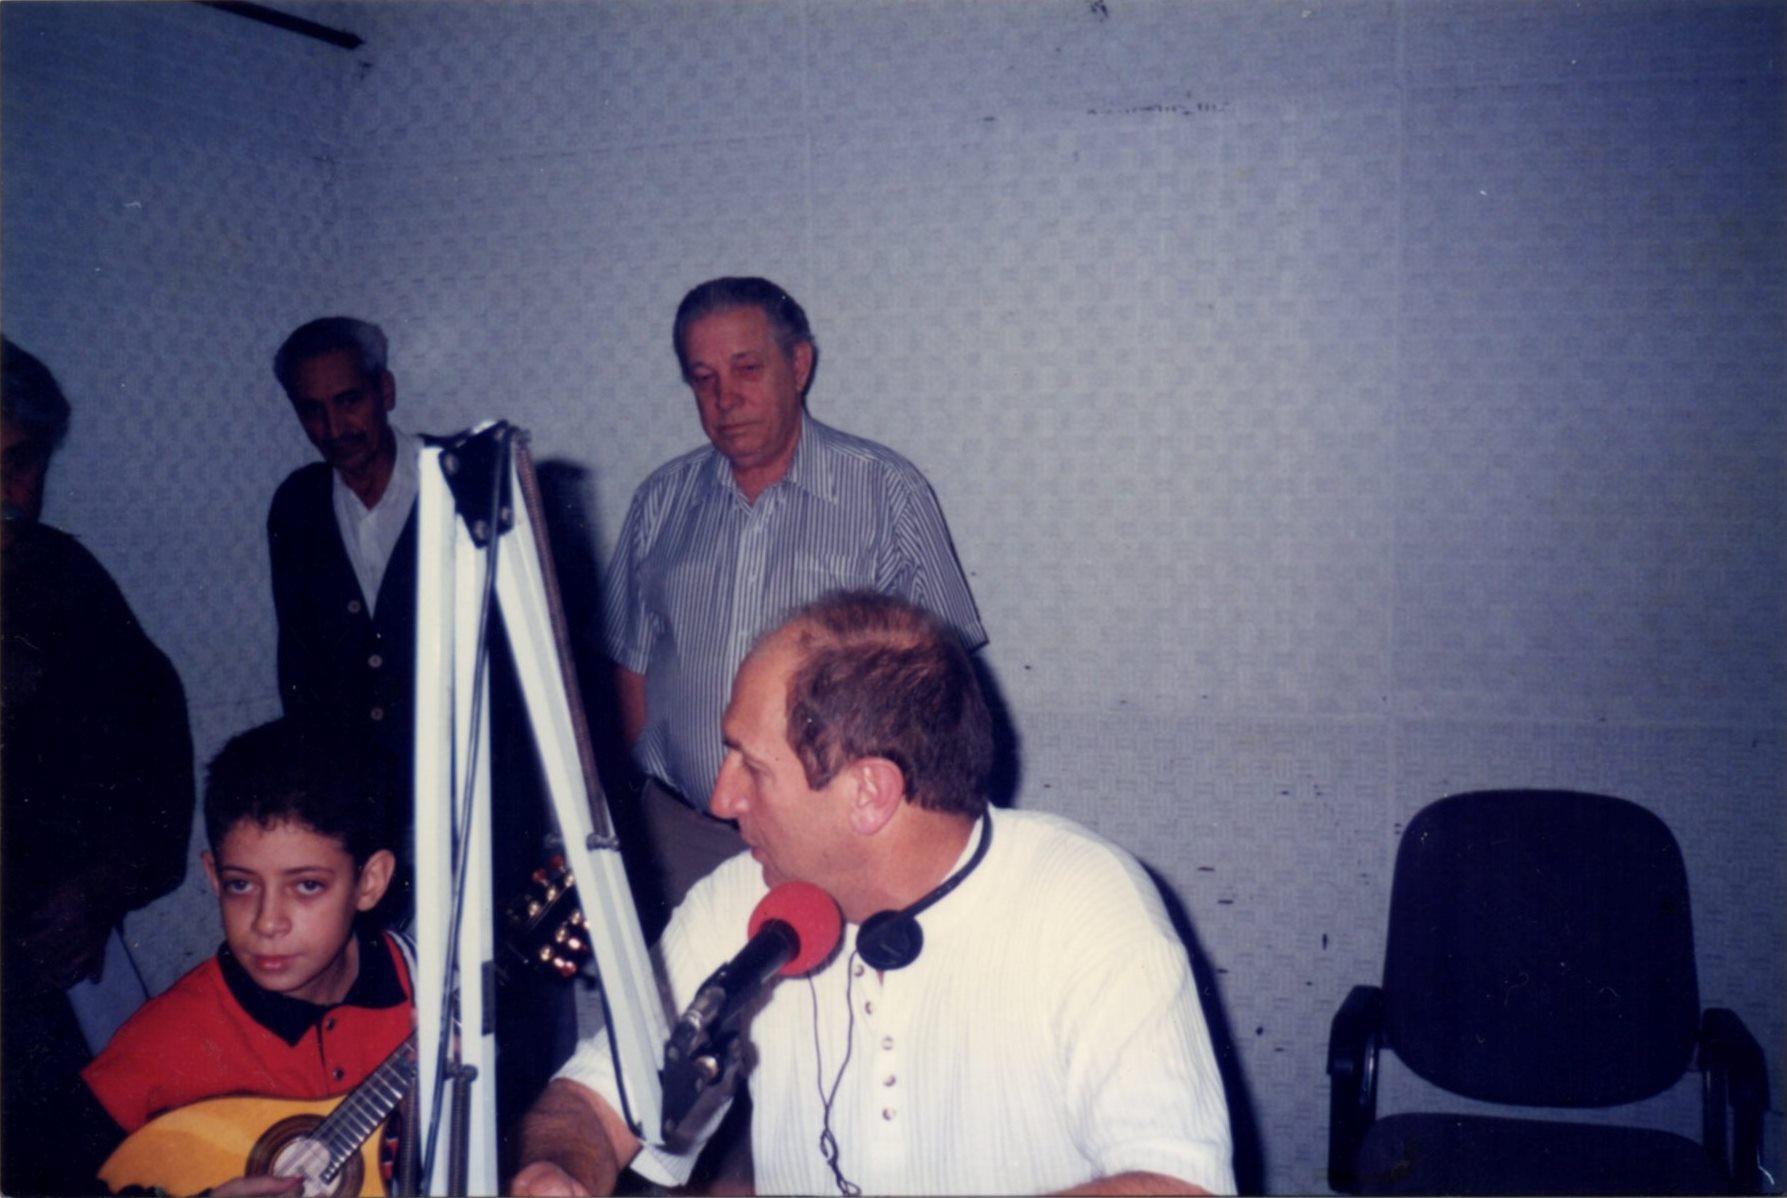 Na Rádio Iguatemi, com José Carlos Gomes